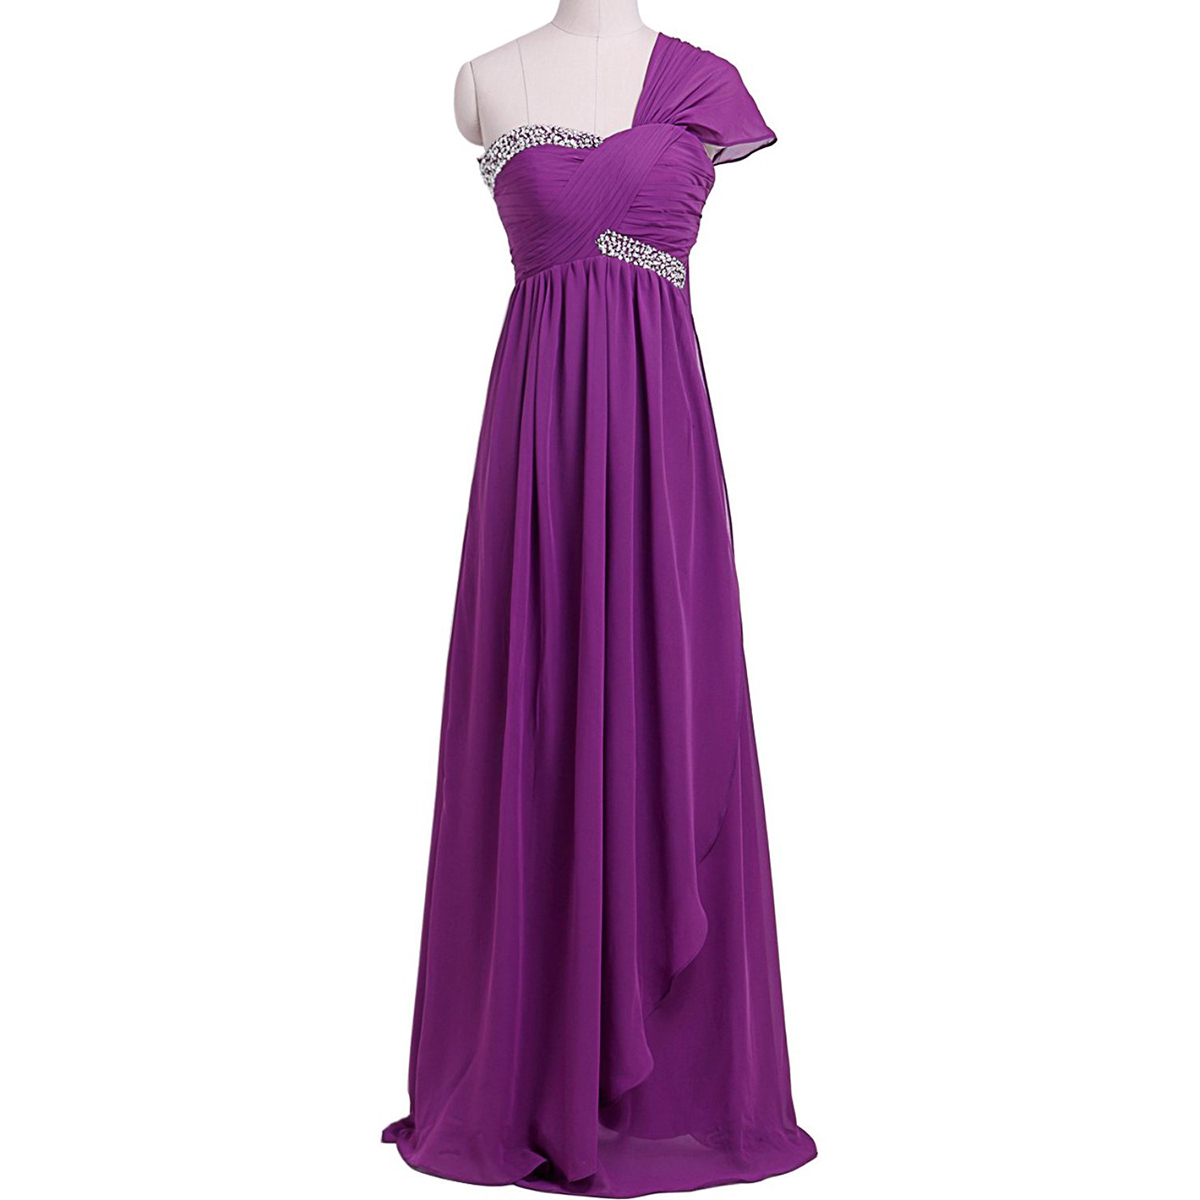 Asymmetric One Shoulder Cap Sleeve Prom Dress, Bead Ruched Long Empire Prom Dress, Elegant Lilac Sequins Chiffon Prom Dress